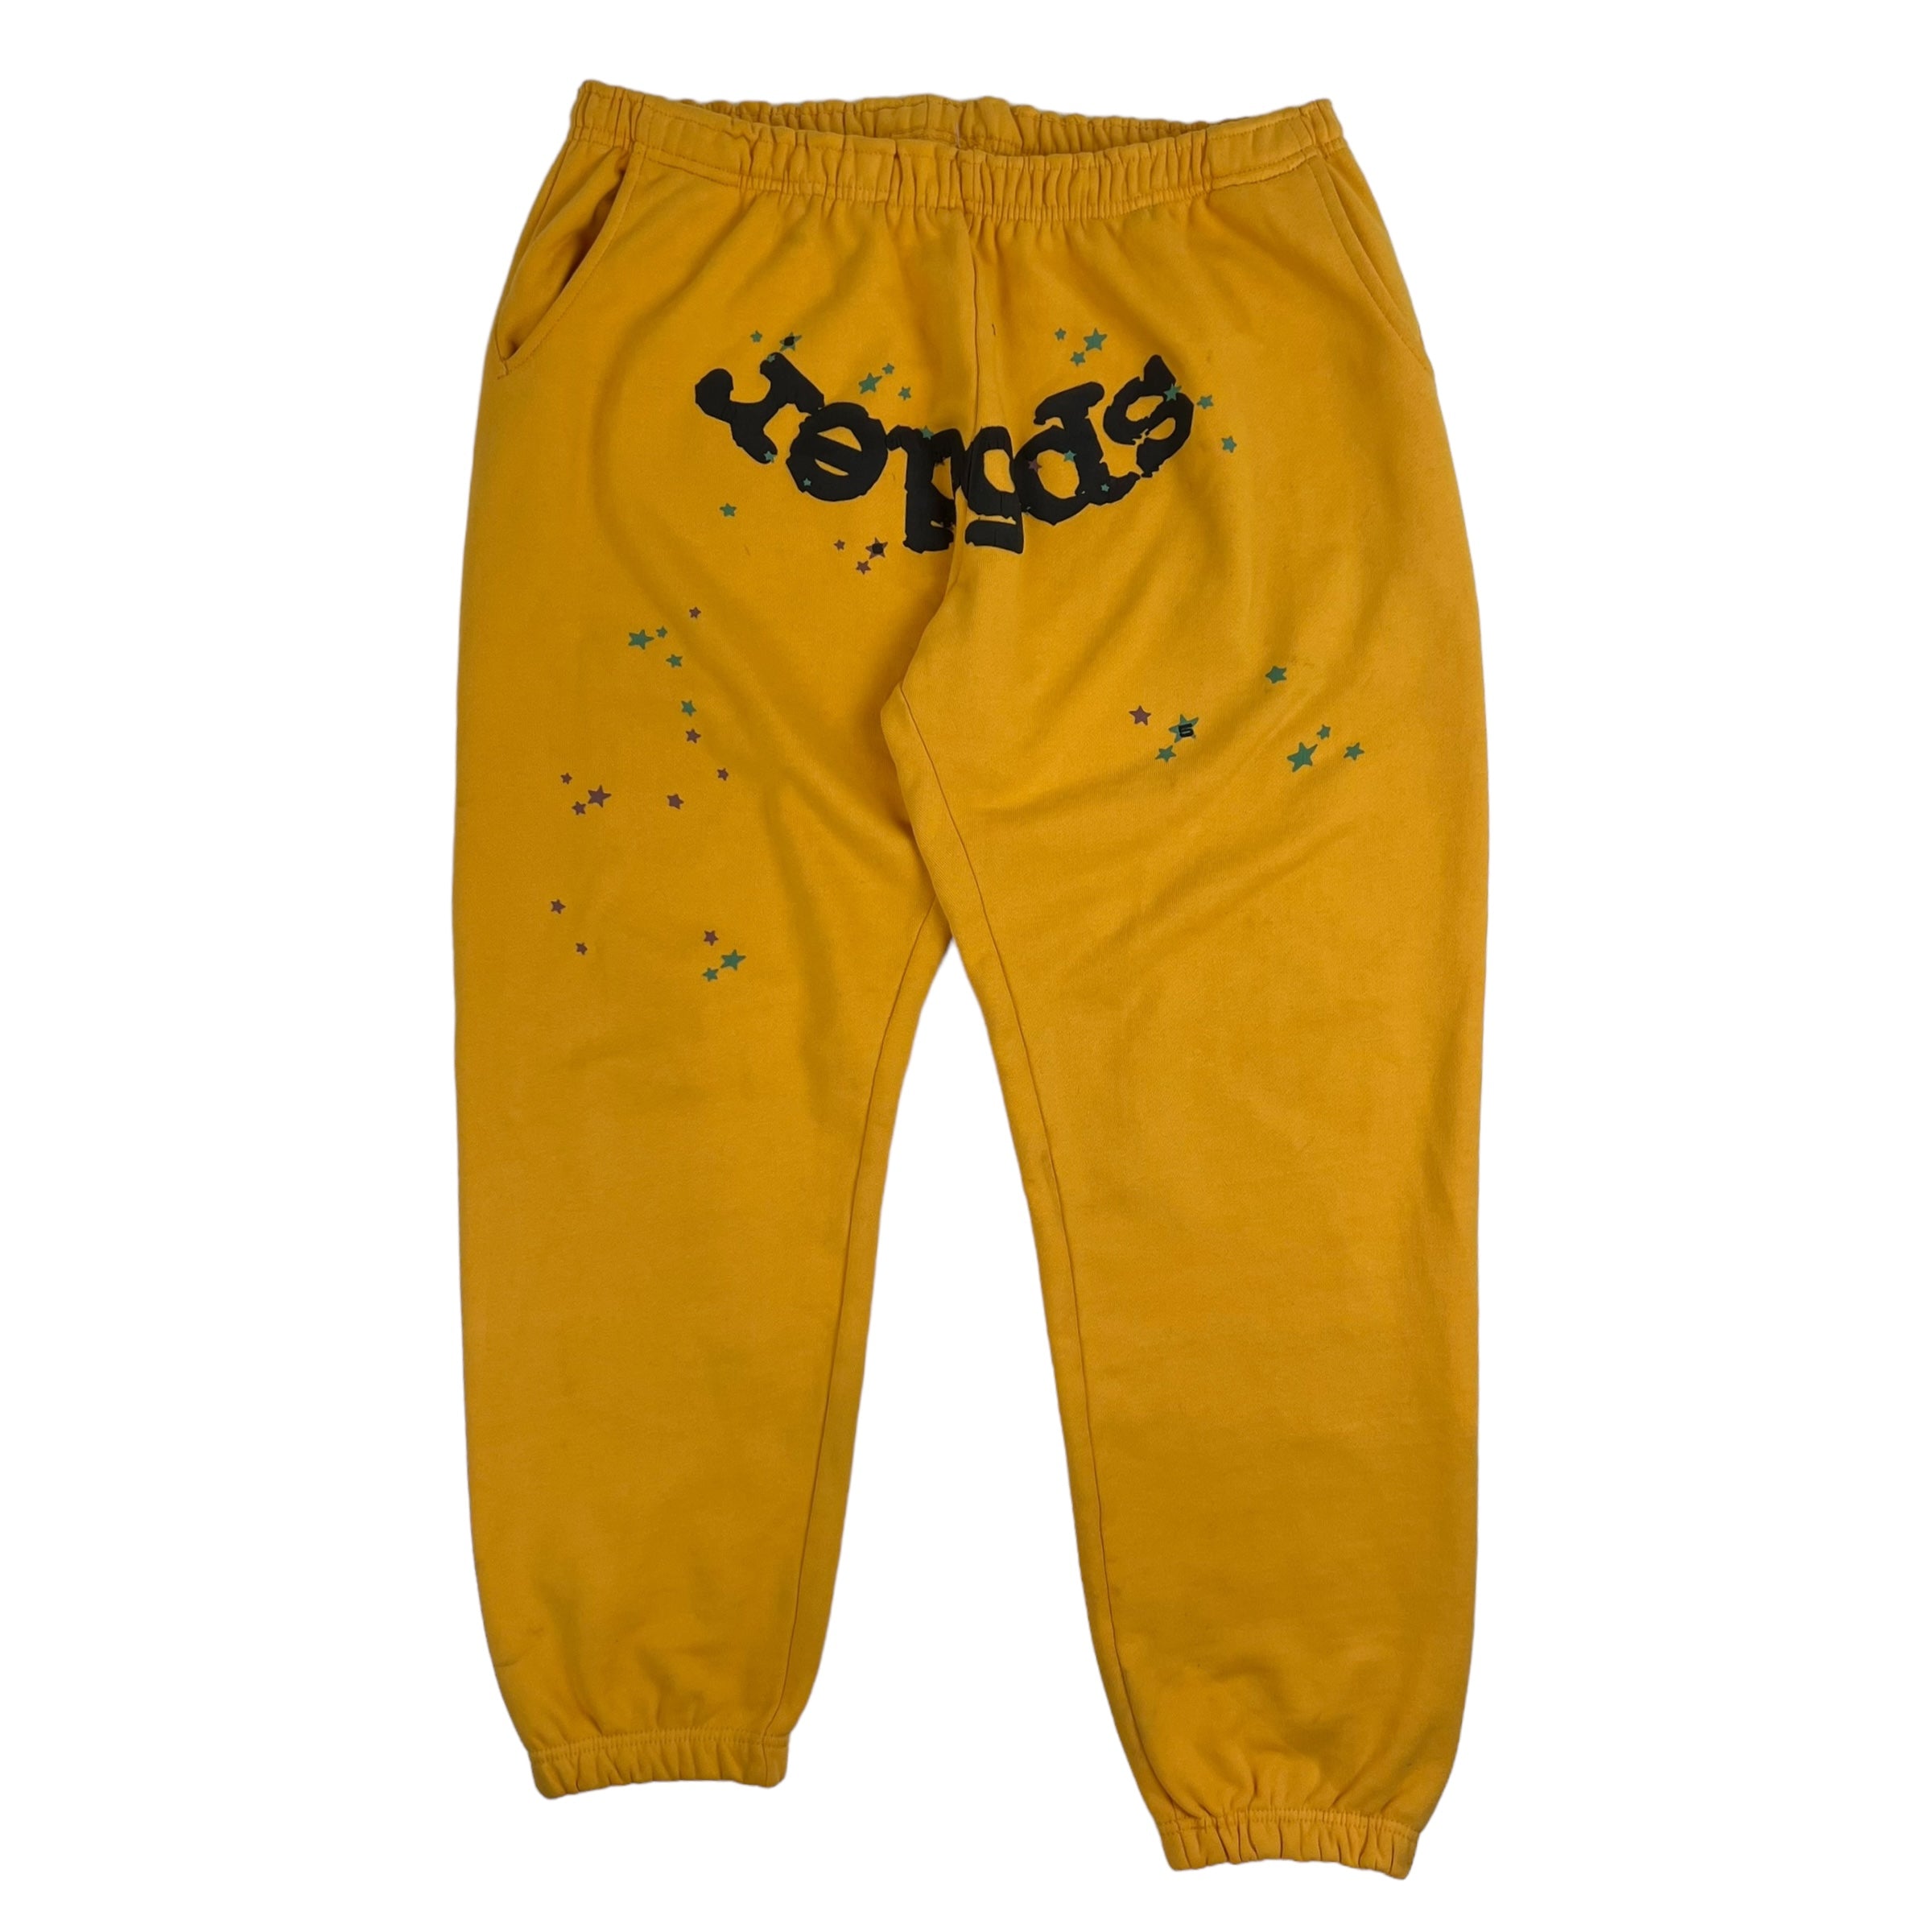 Sp5der Worldwide Sweatpants Yellow - Sp5der Sweatpants